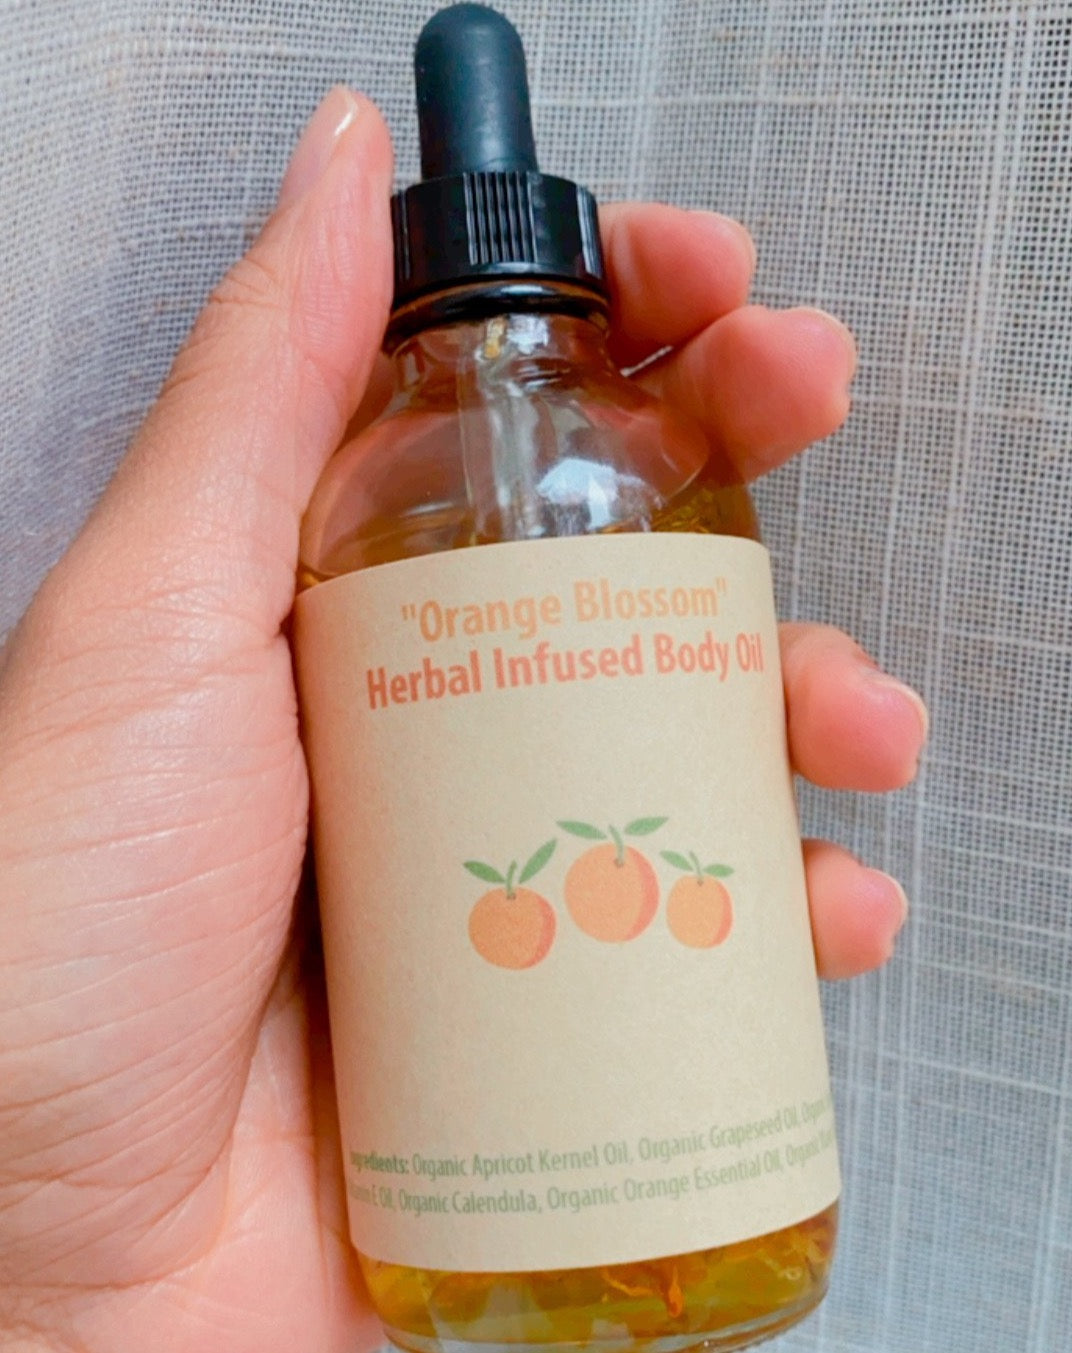 "Orange Blossom" Herbal Infused Body Oil